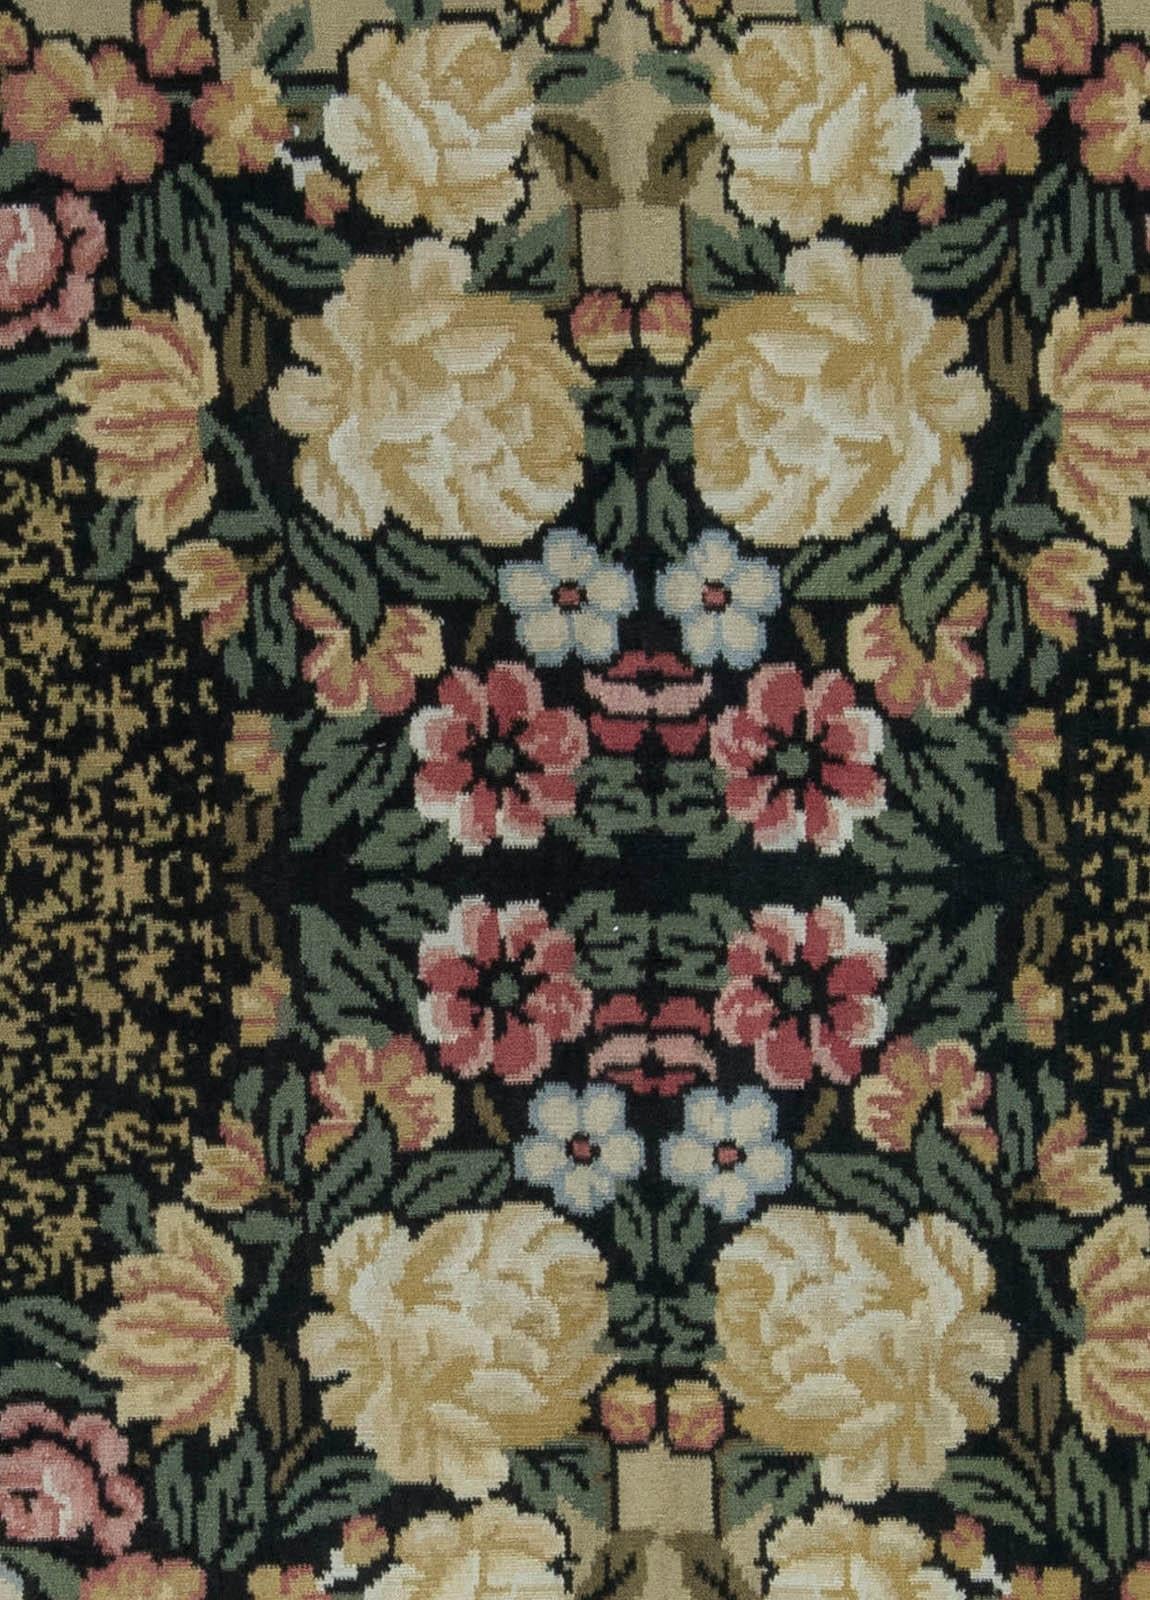 Contemporary European inspired Bessarabian floral wool rug by Doris Leslie Blau.
Size: 9'1